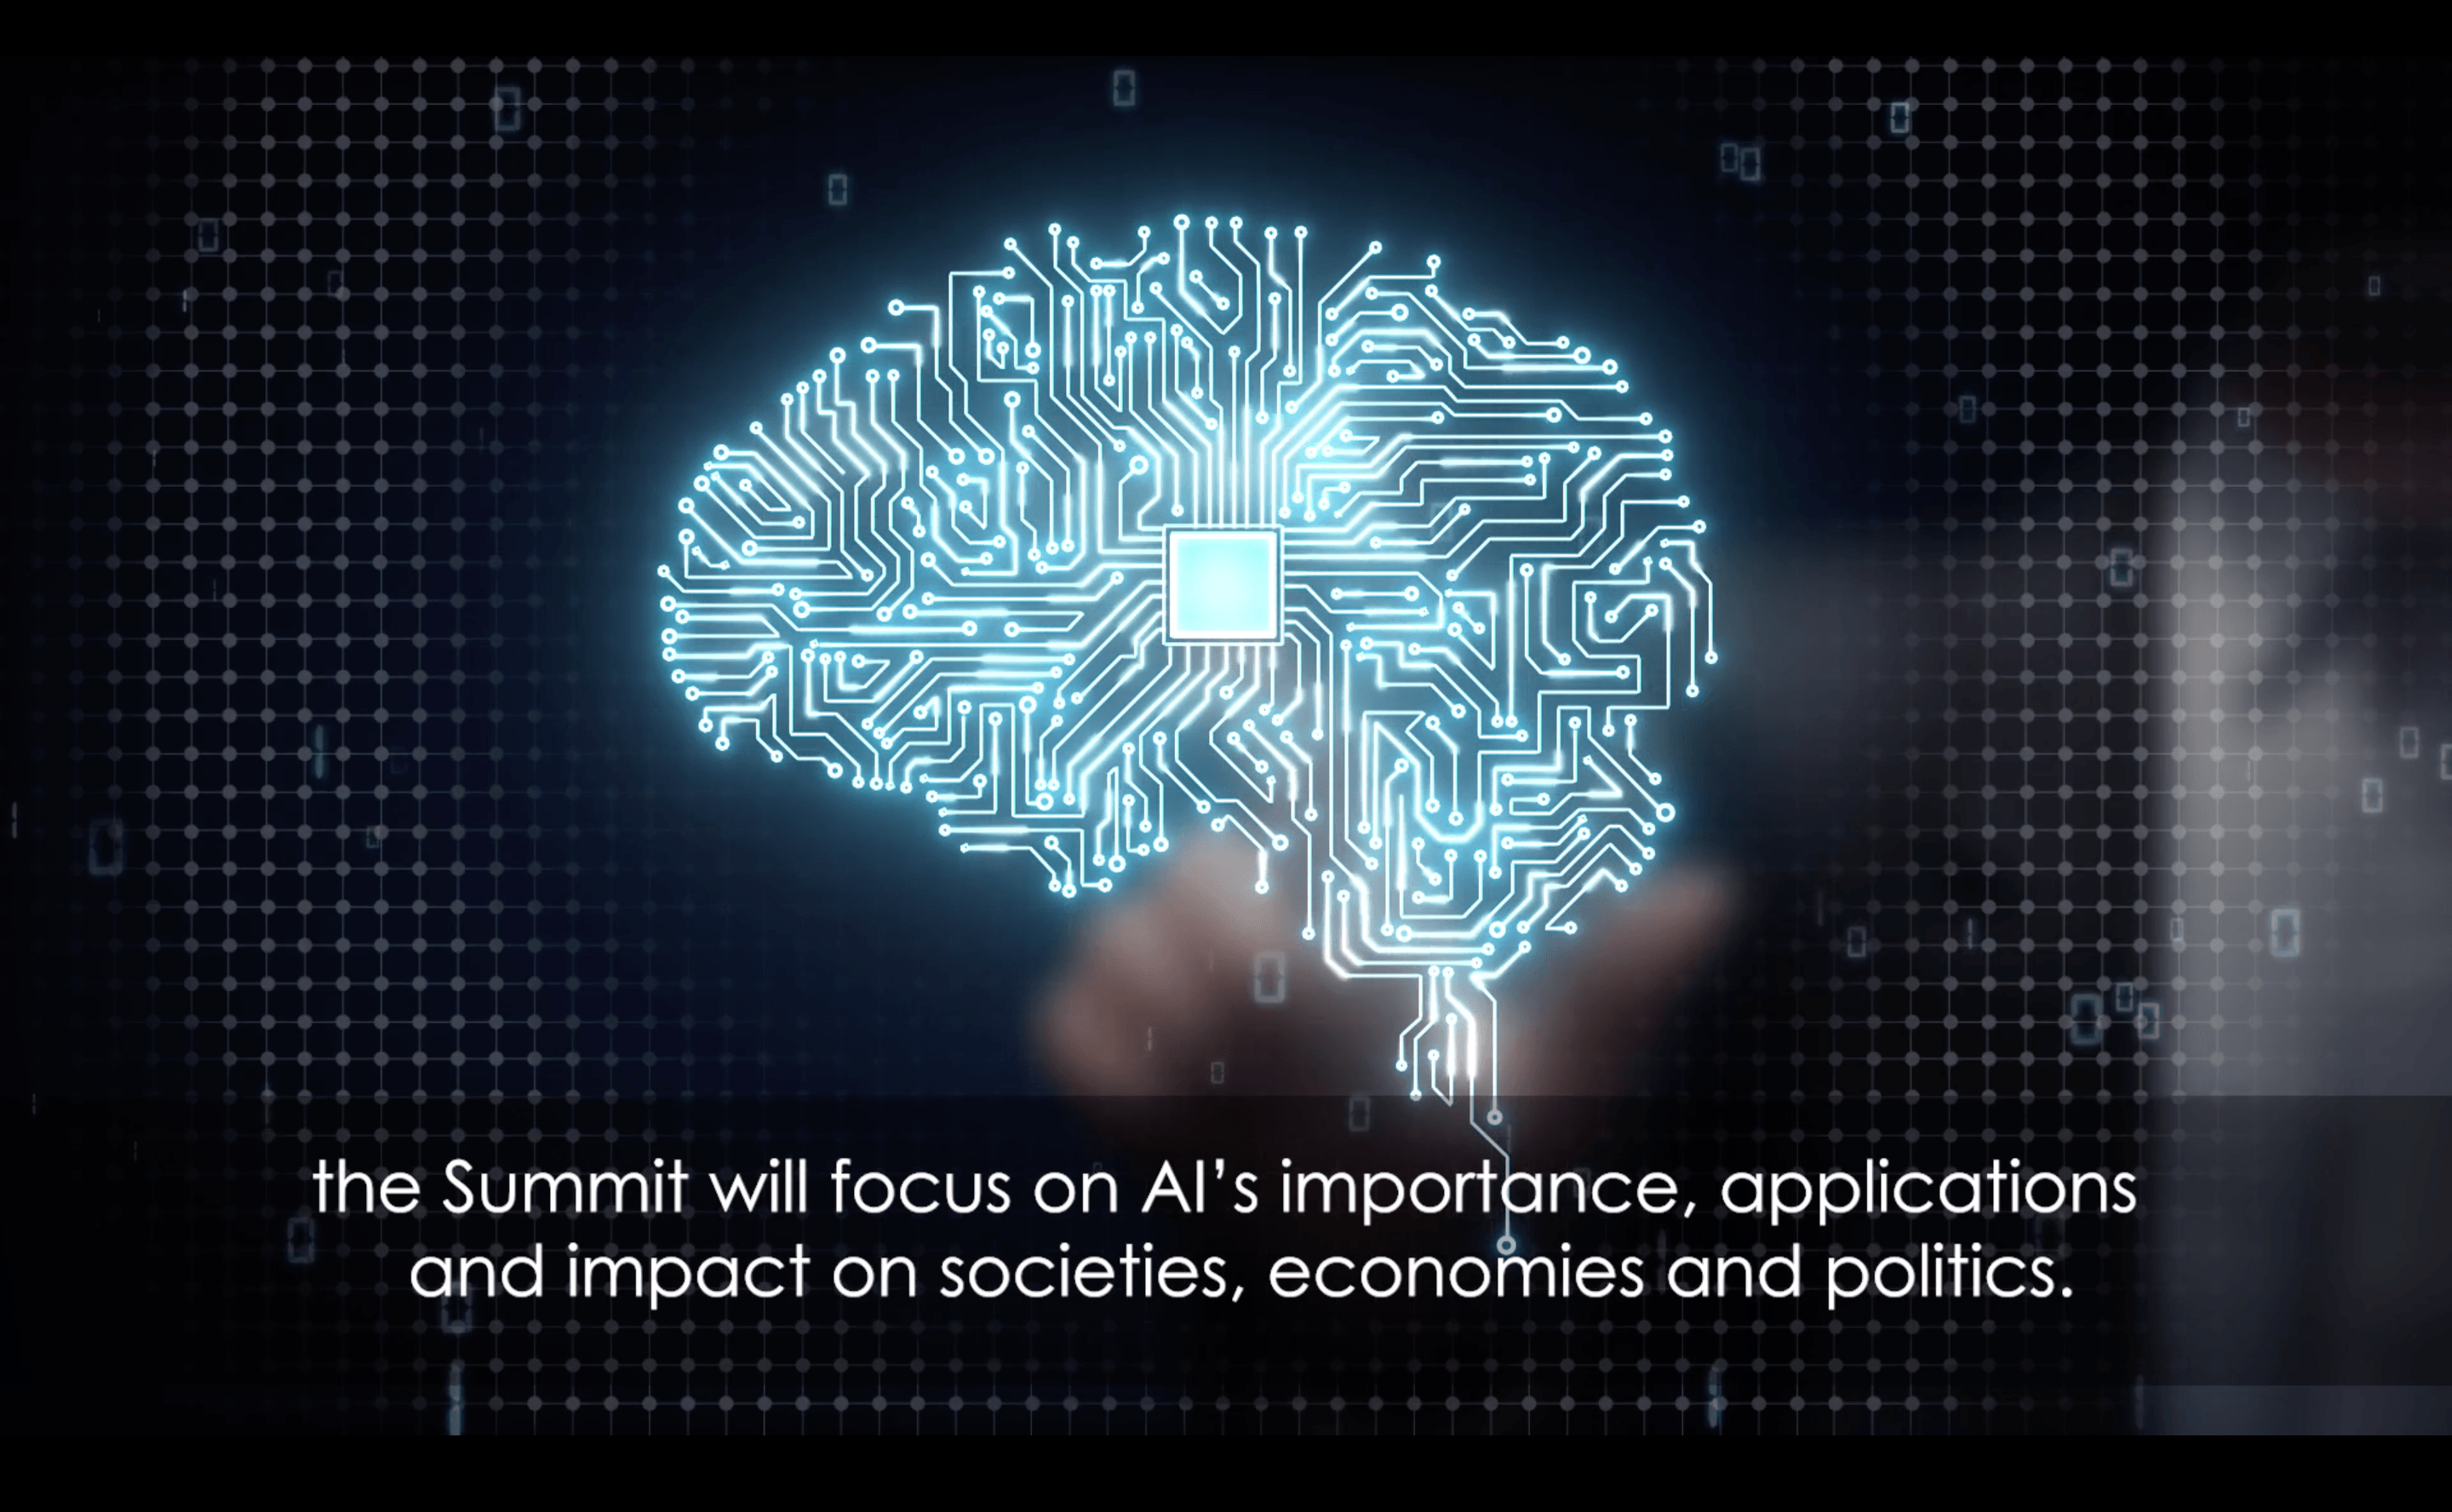 Saudi Arabia to Host First Ever Global AI Summit in 2020